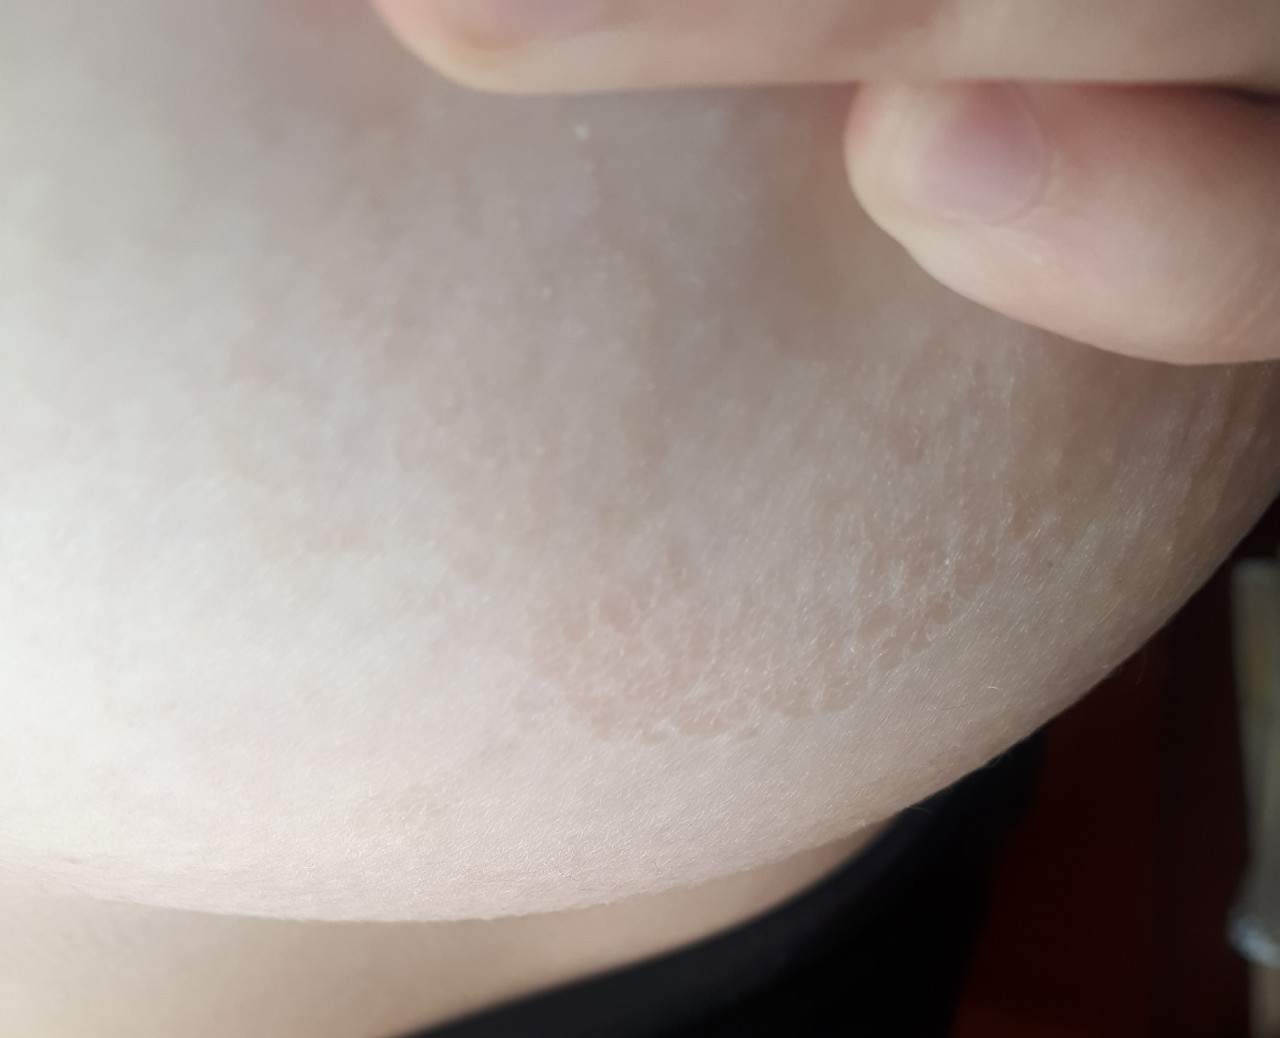 зуд кожи груди у женщин фото 107